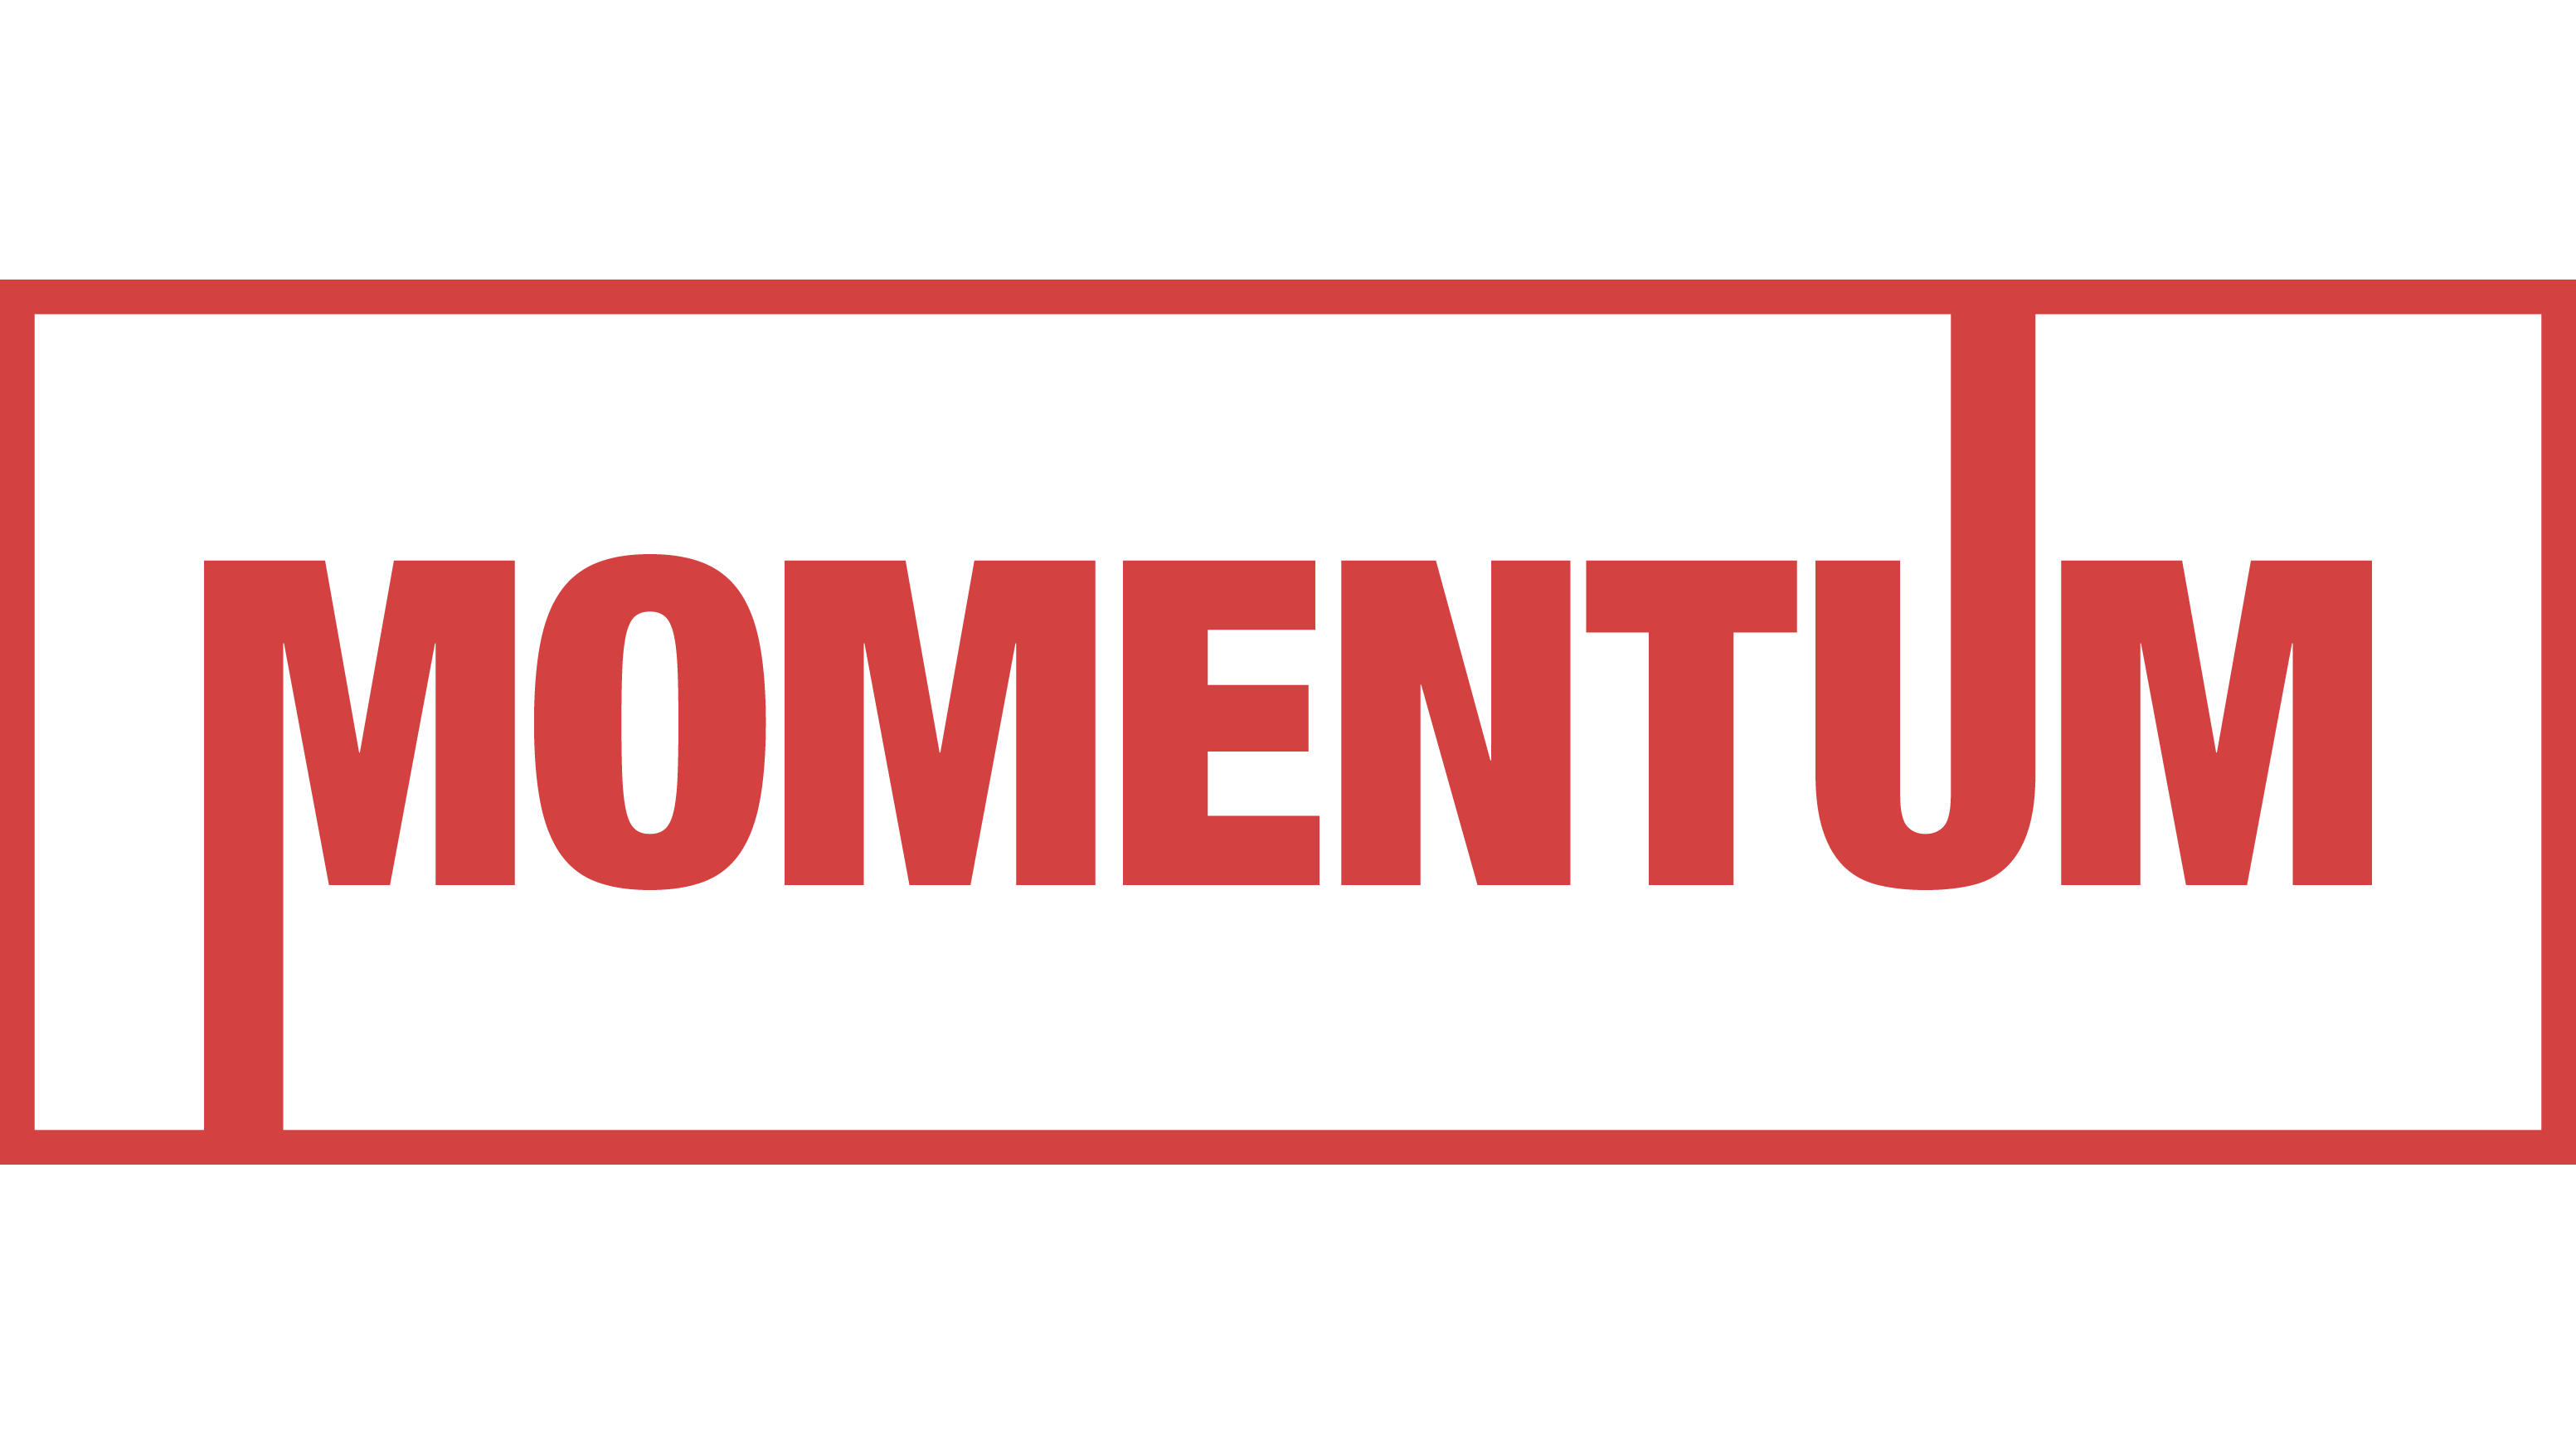 Momentum Logo - Momentum-logo | The Project